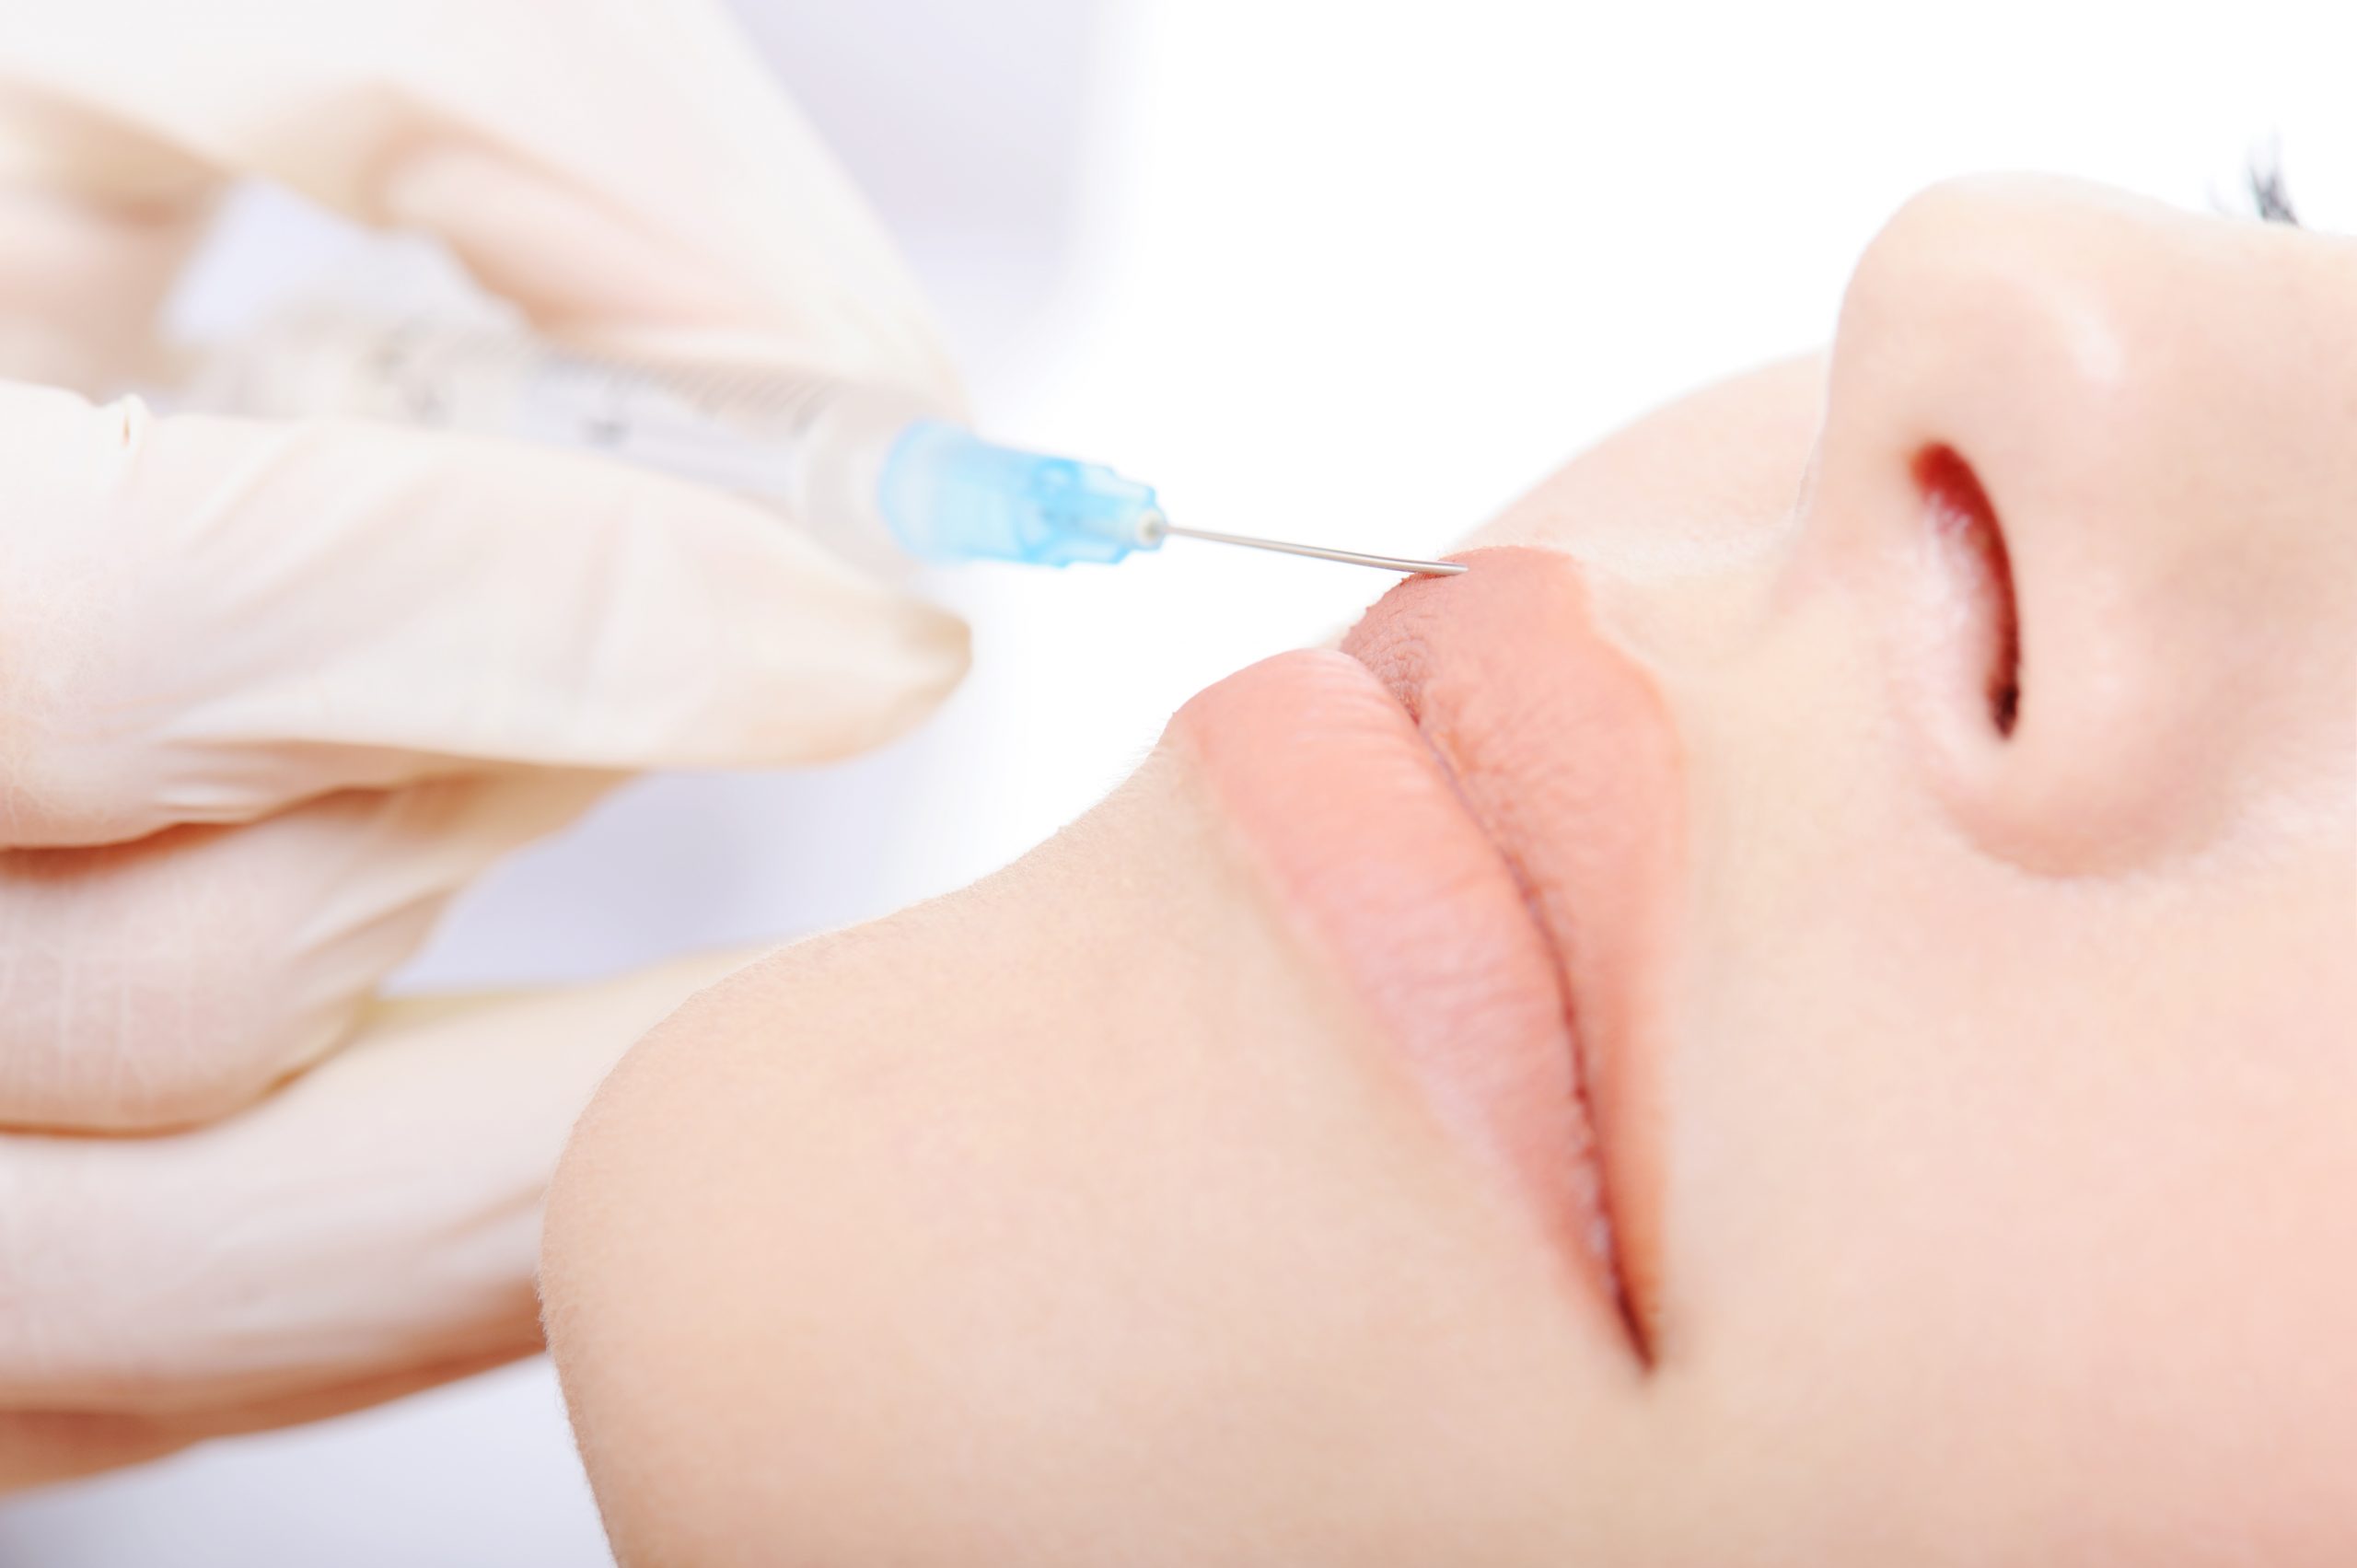 dentist-applying-botox-injection-lips